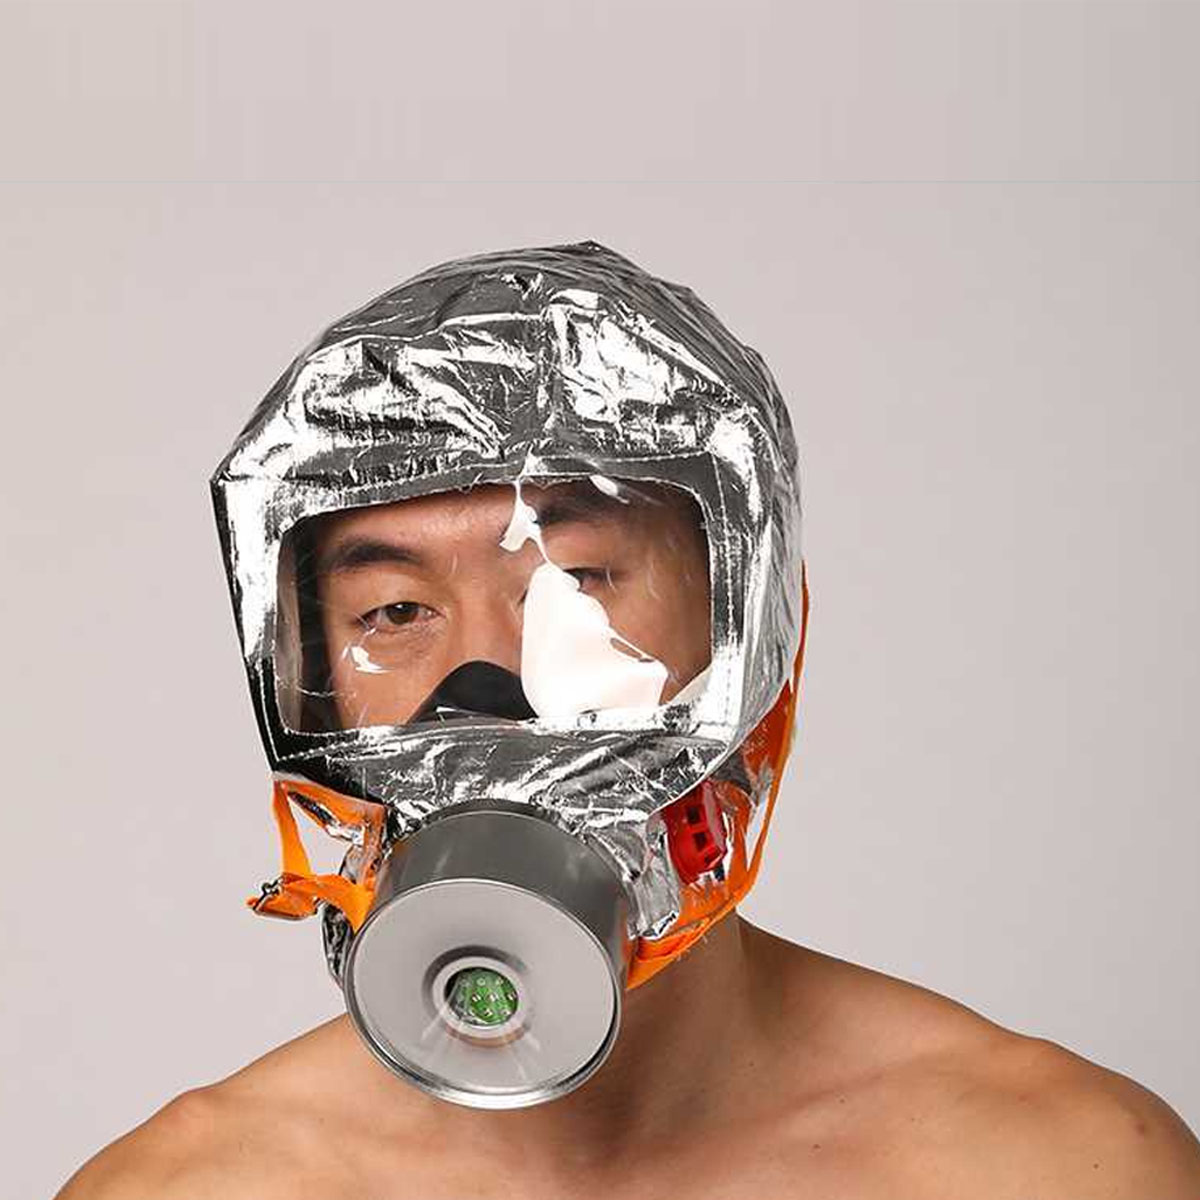 Fire-Emergency-Escape-Mask-Oxygen-Smoke-Gas-Self-life-saving-Smoke-Toxic-Filter-1367124